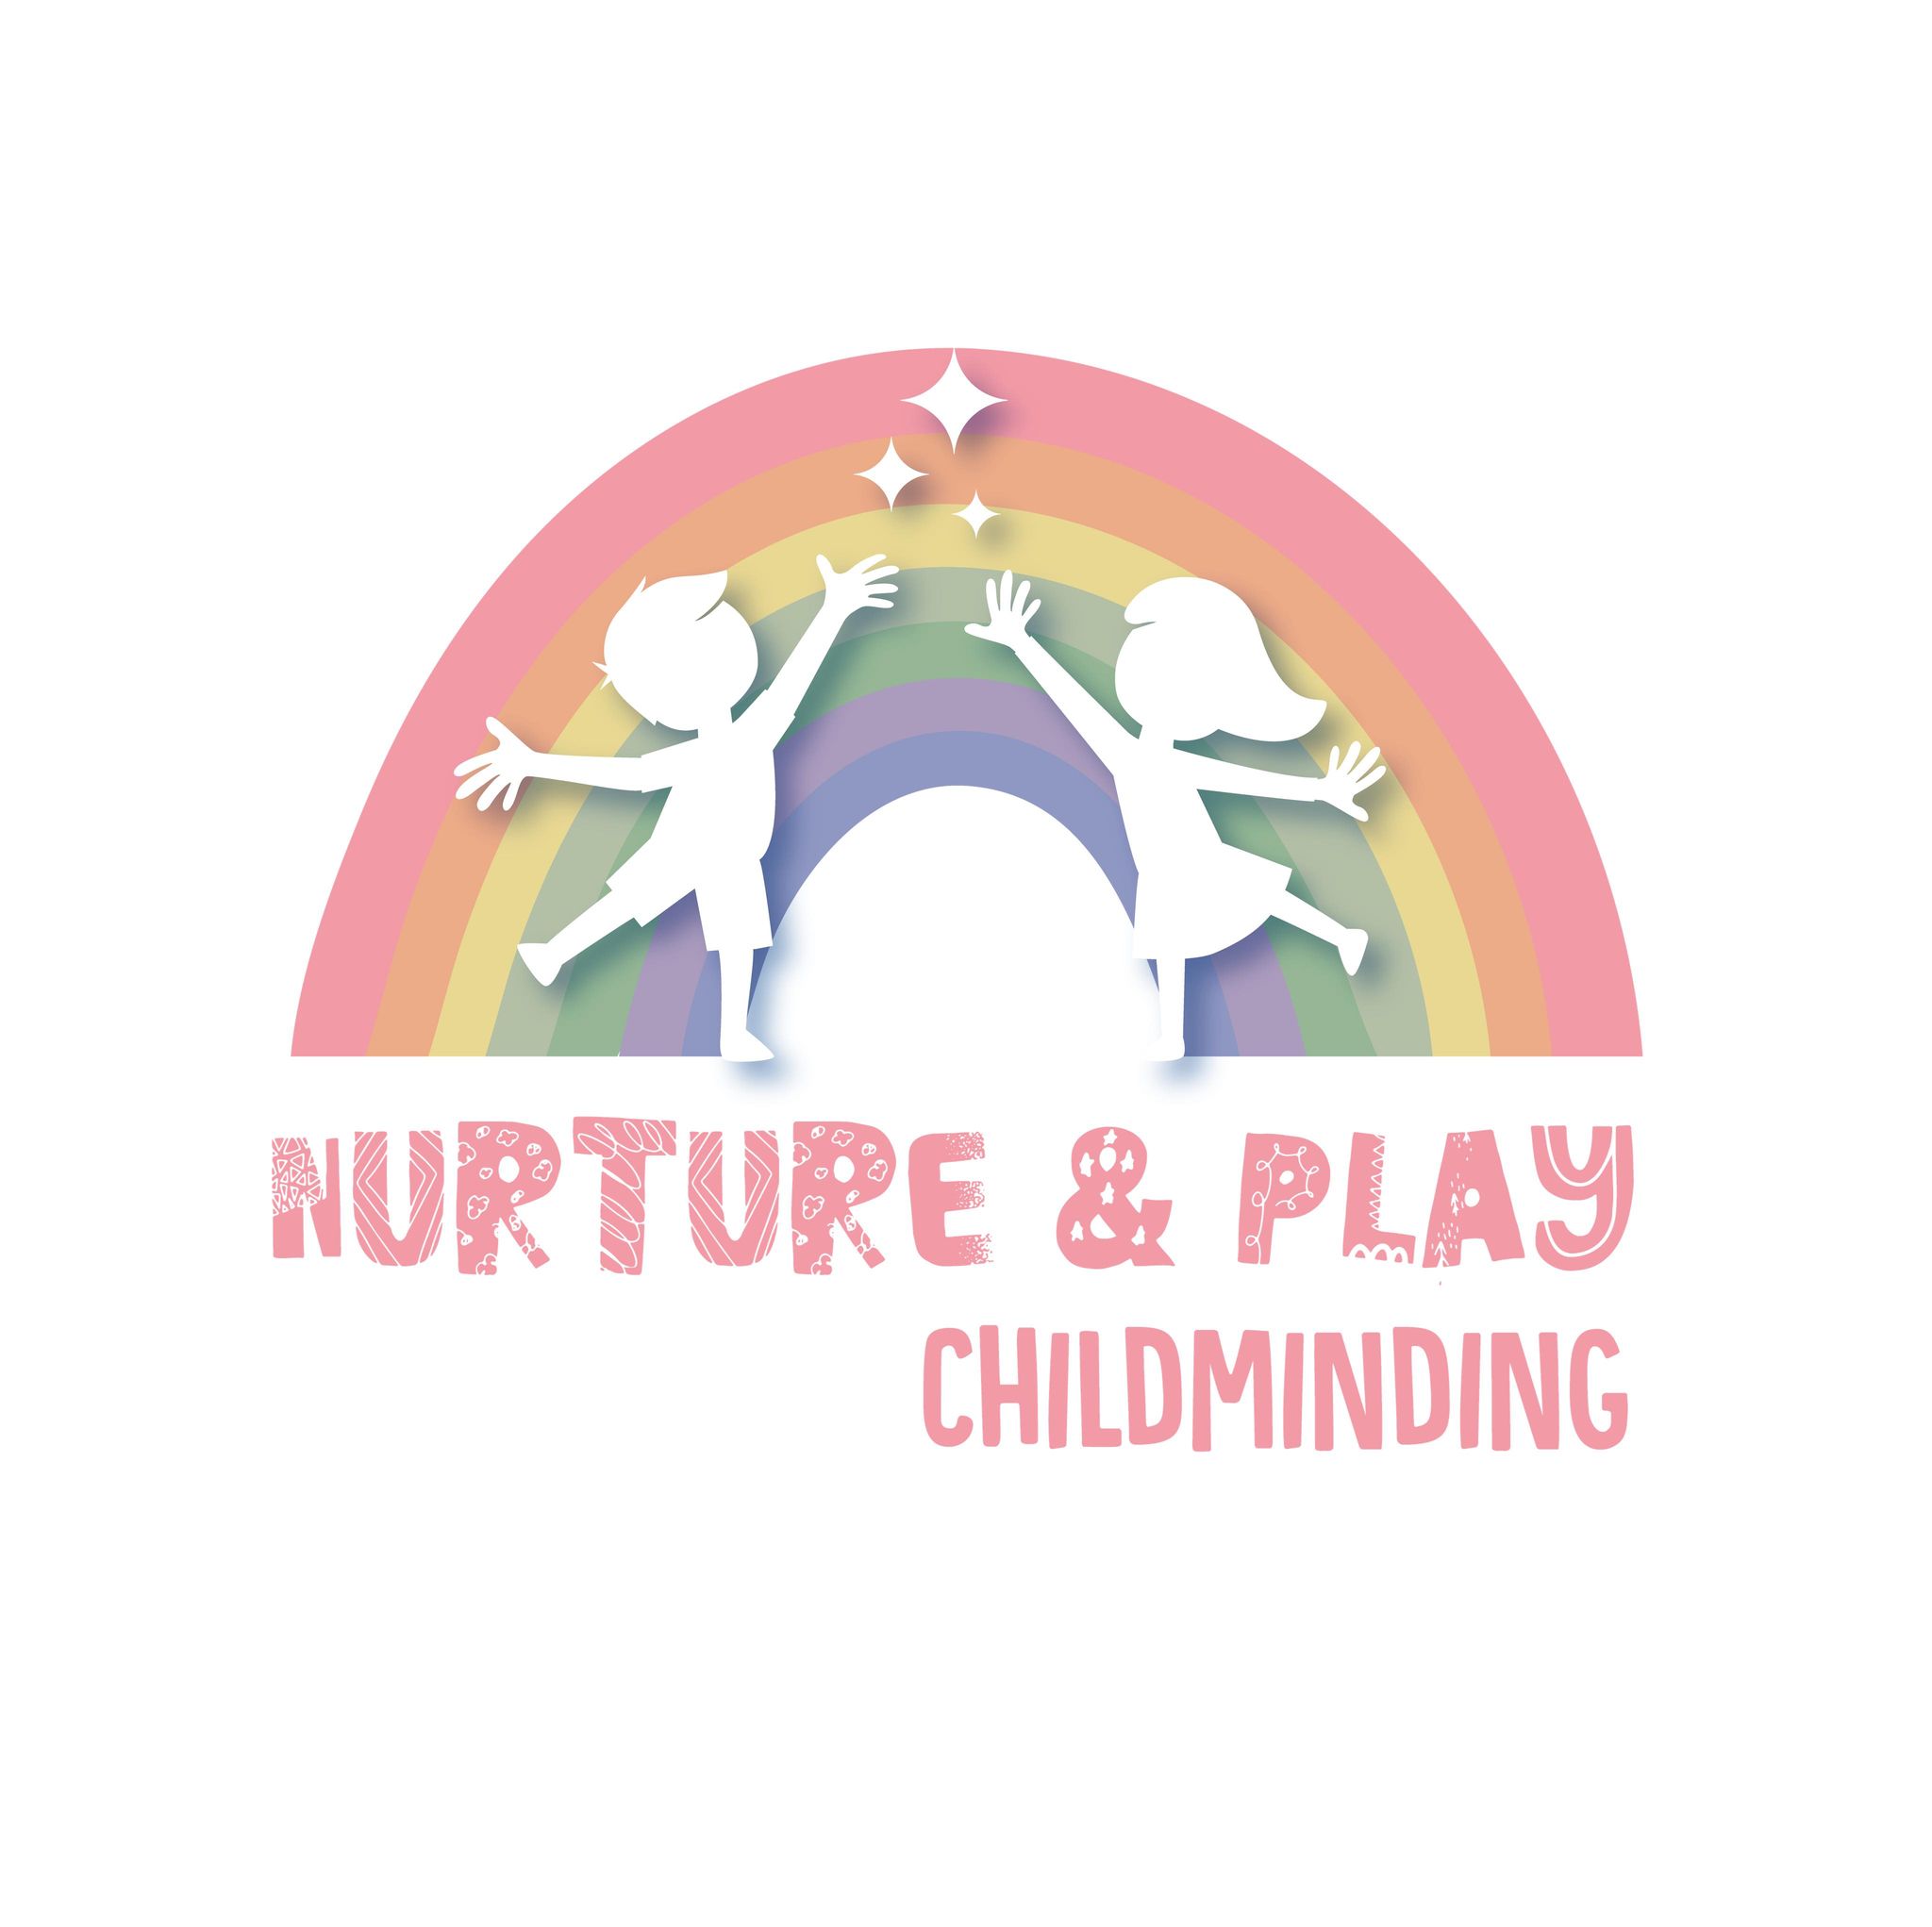 Nurture & Play Childminding's logo